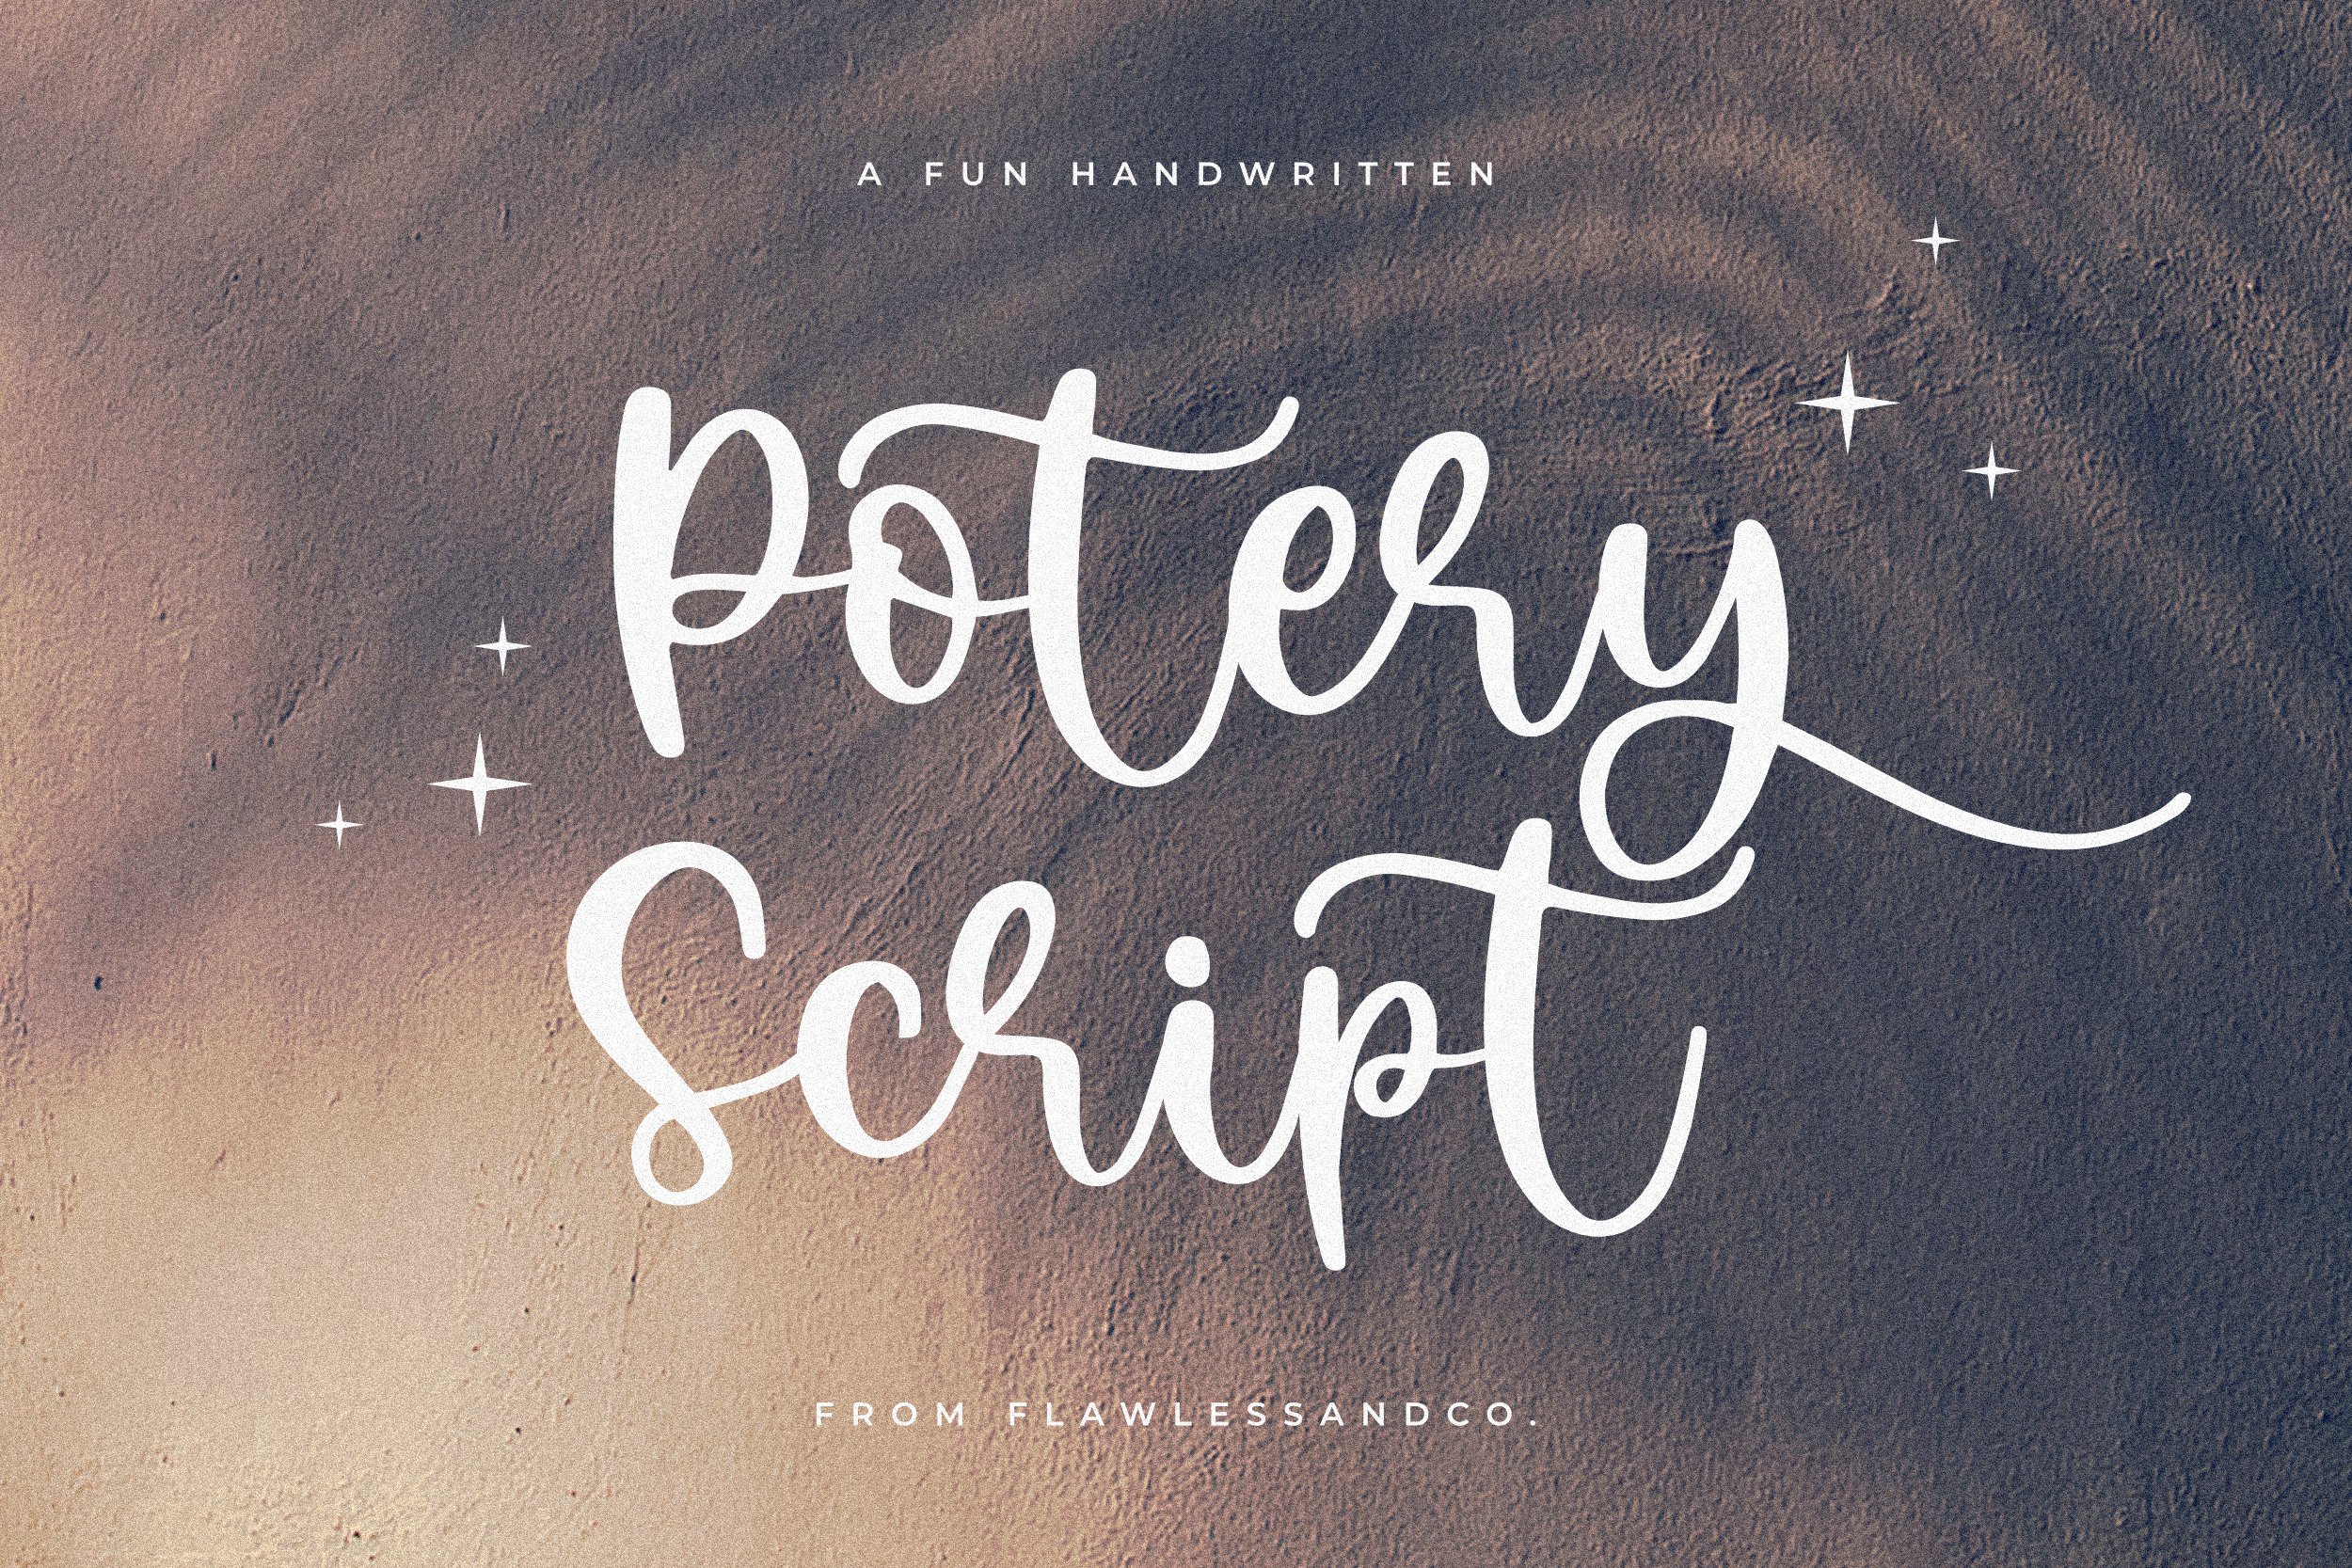 Potery Script - Fun Handwritten Font cover image.